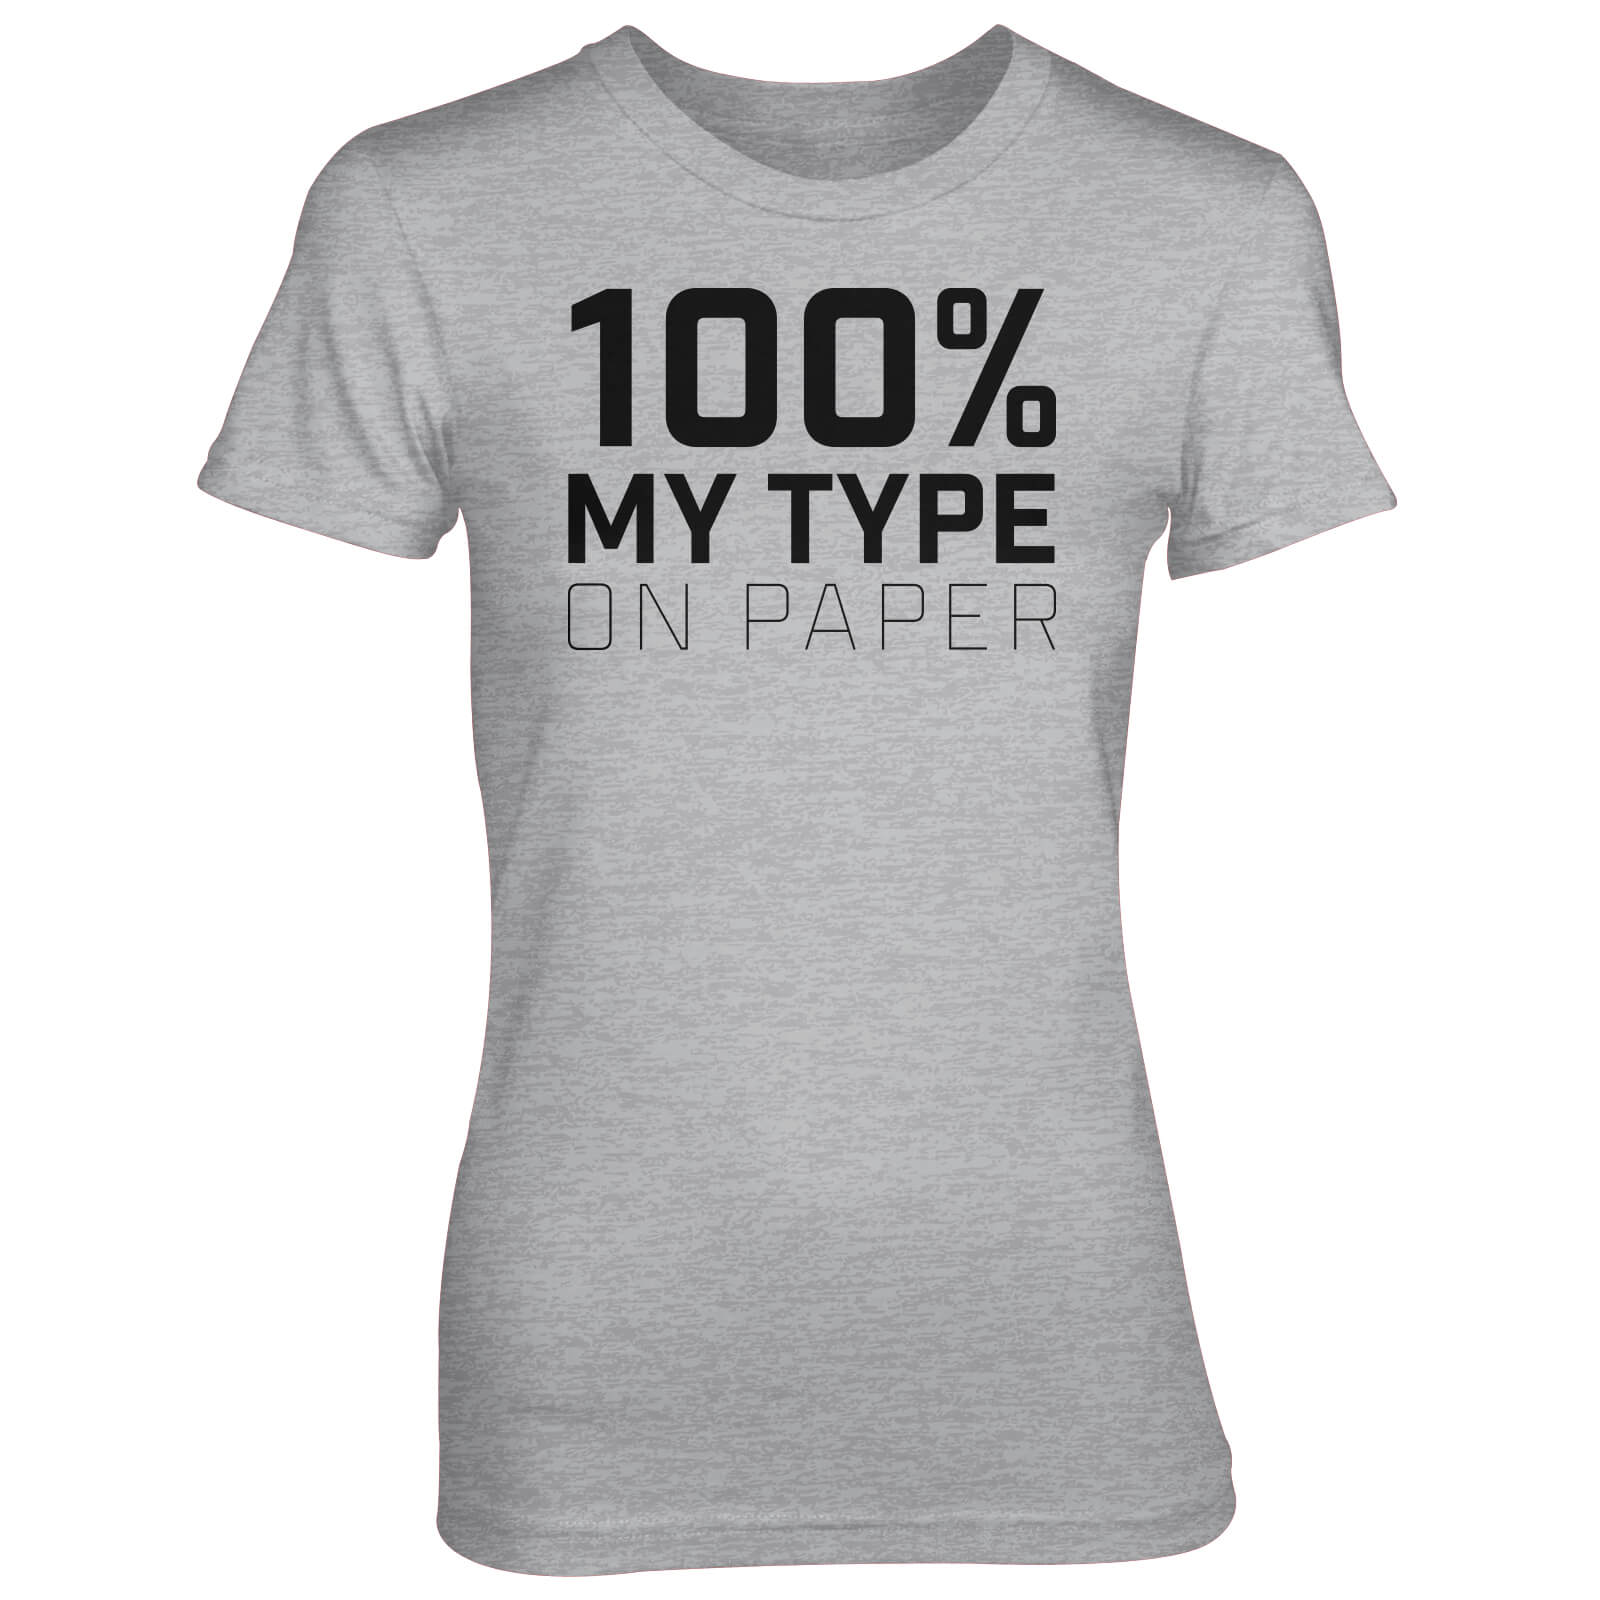 100% My Type On Paper Women's Grey T-Shirt - S - Grey